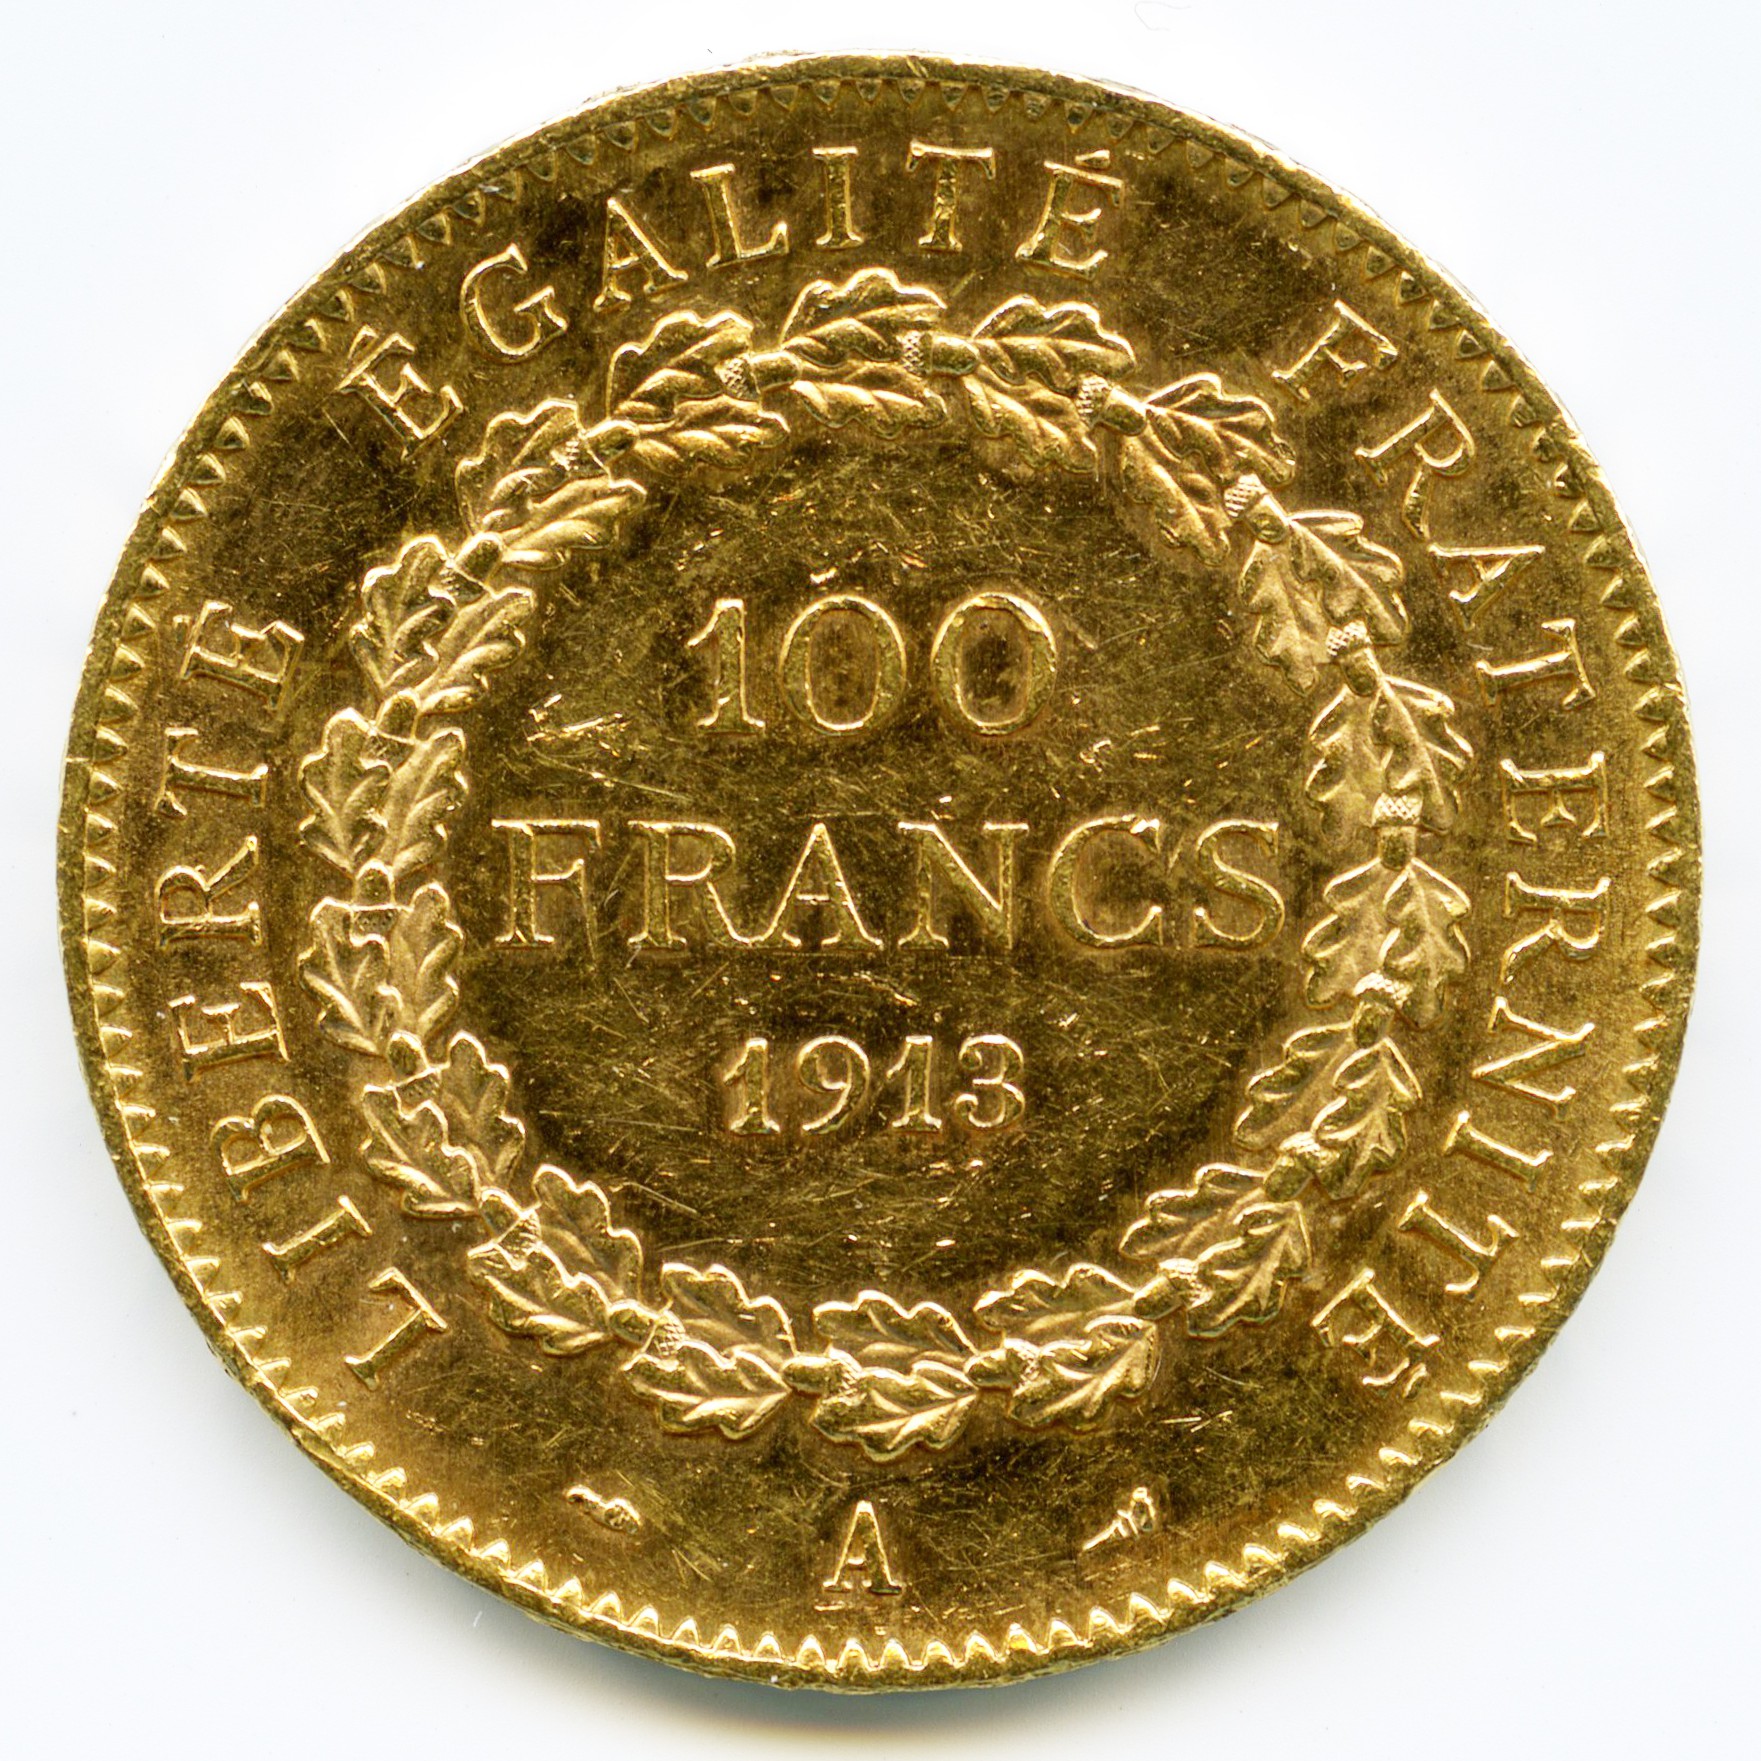 100 Francs Génie - 1913 A revers